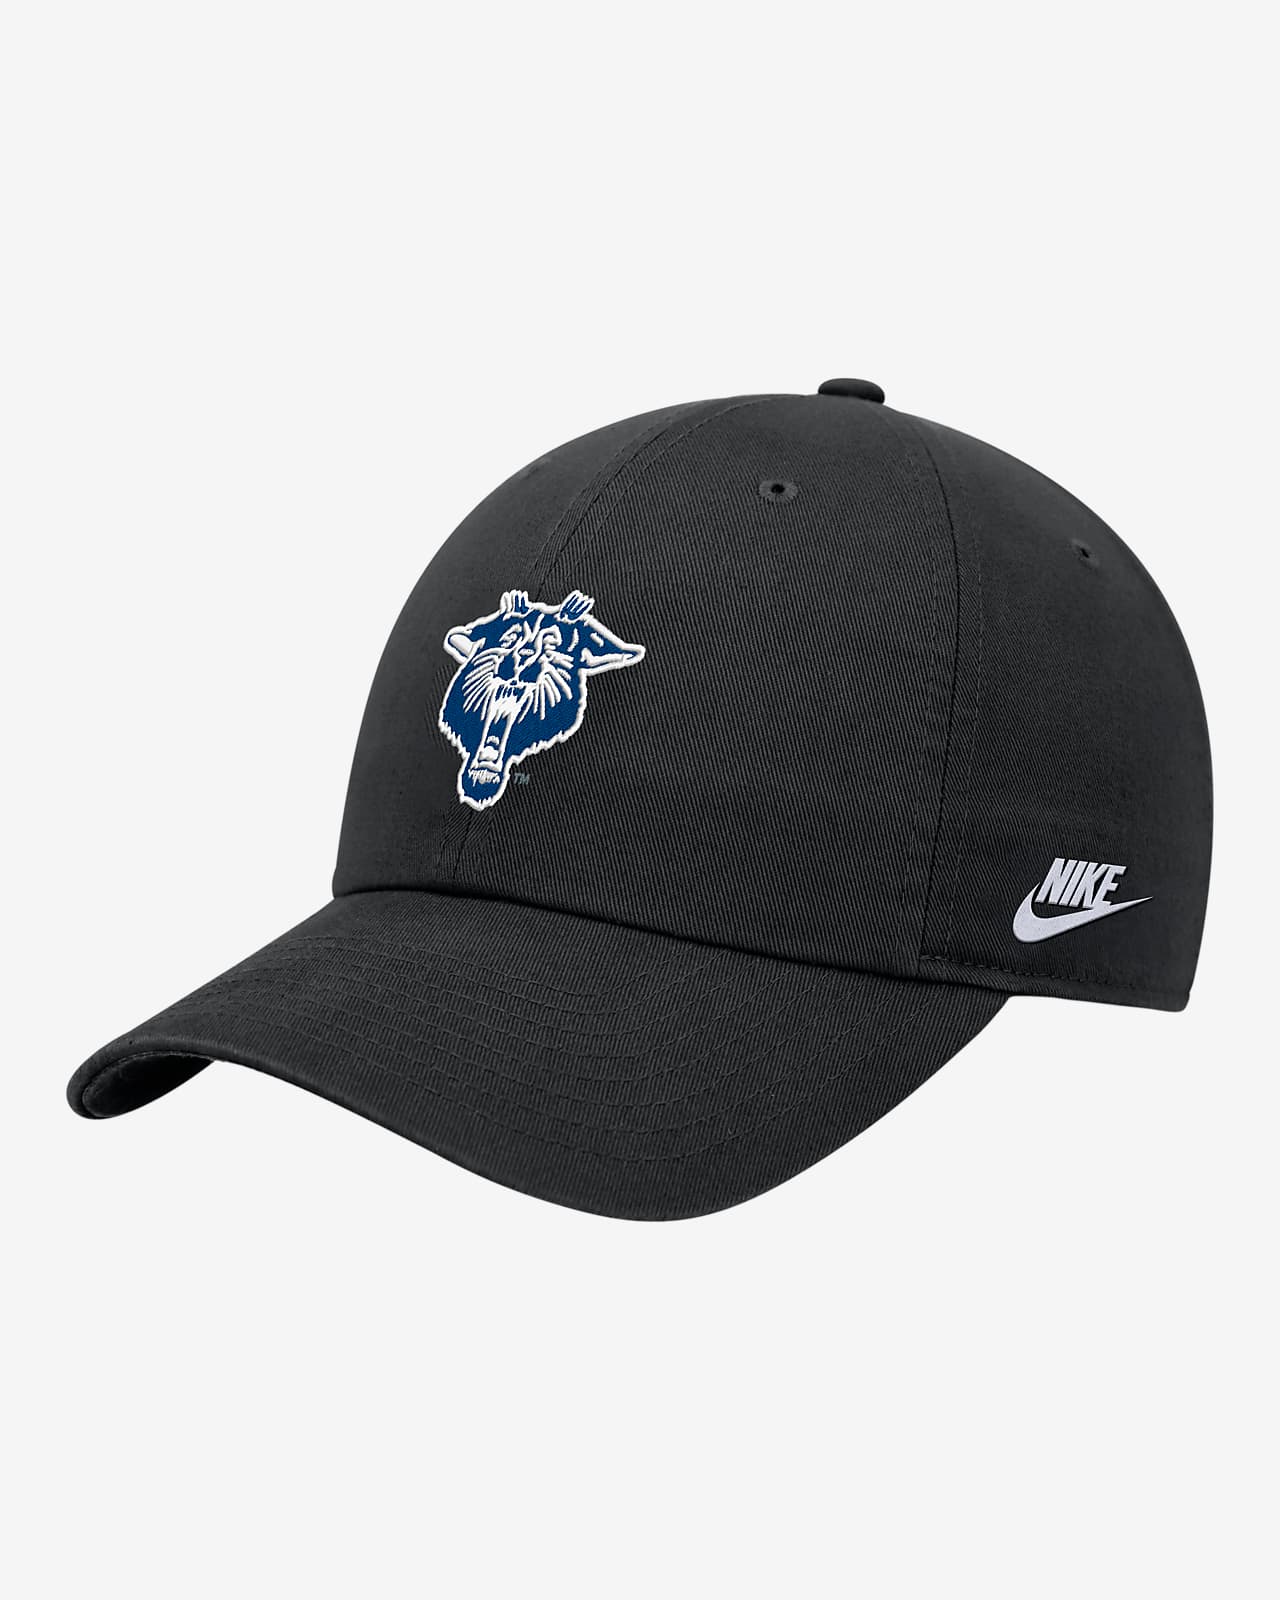 Kentucky Nike College Cap